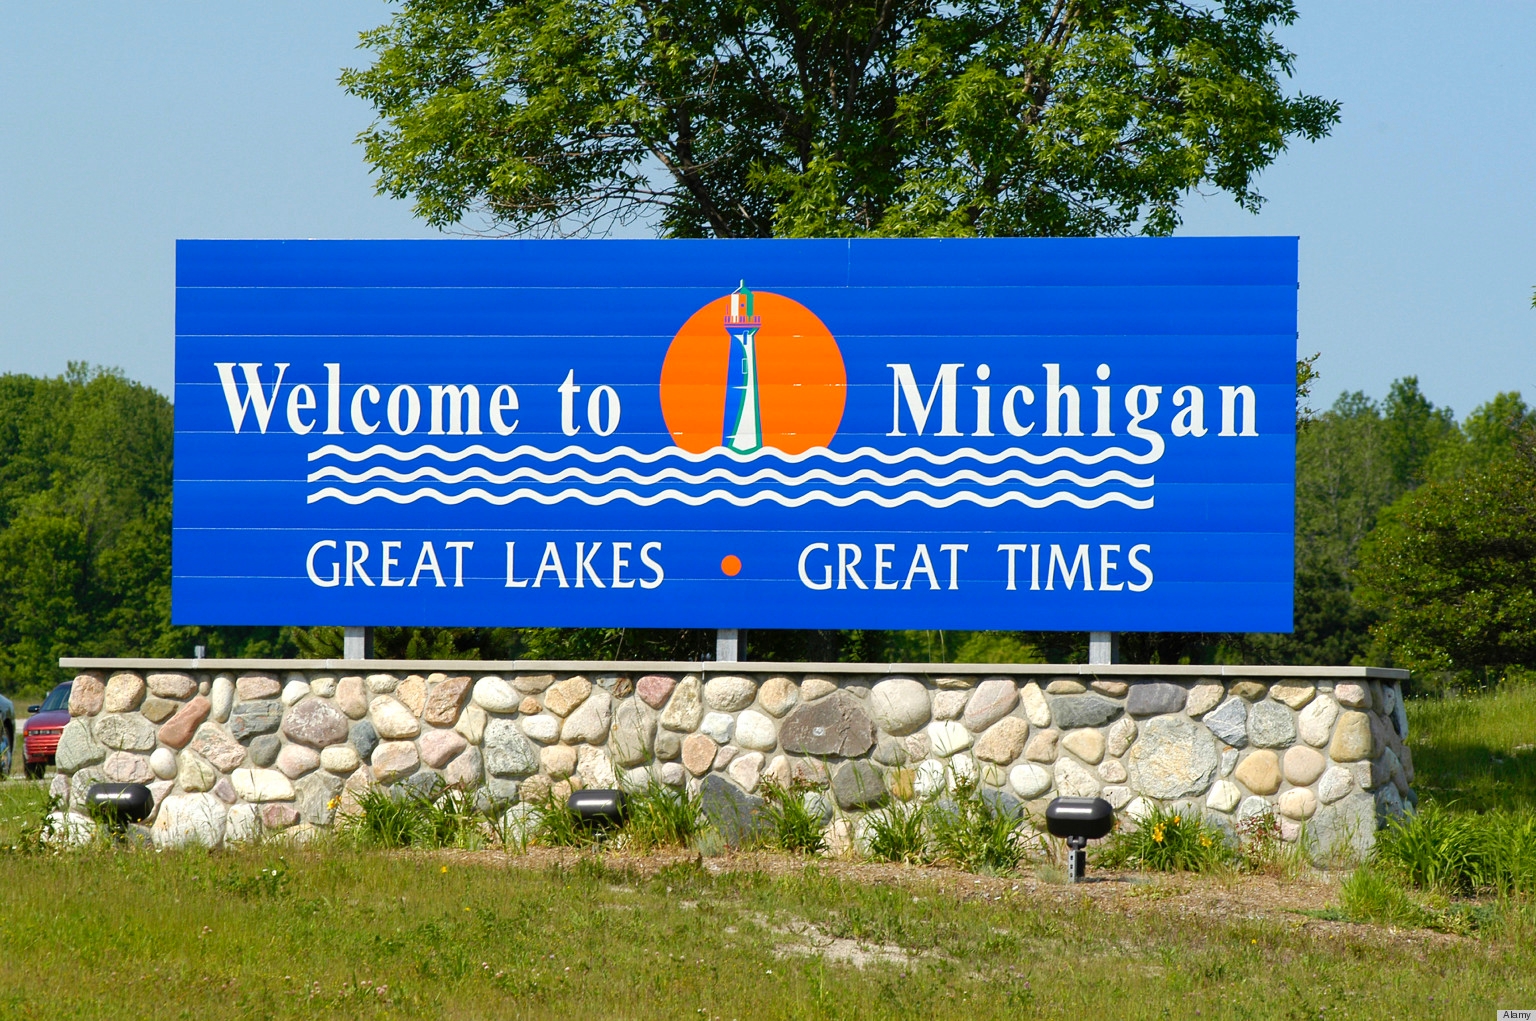 1. Michigan